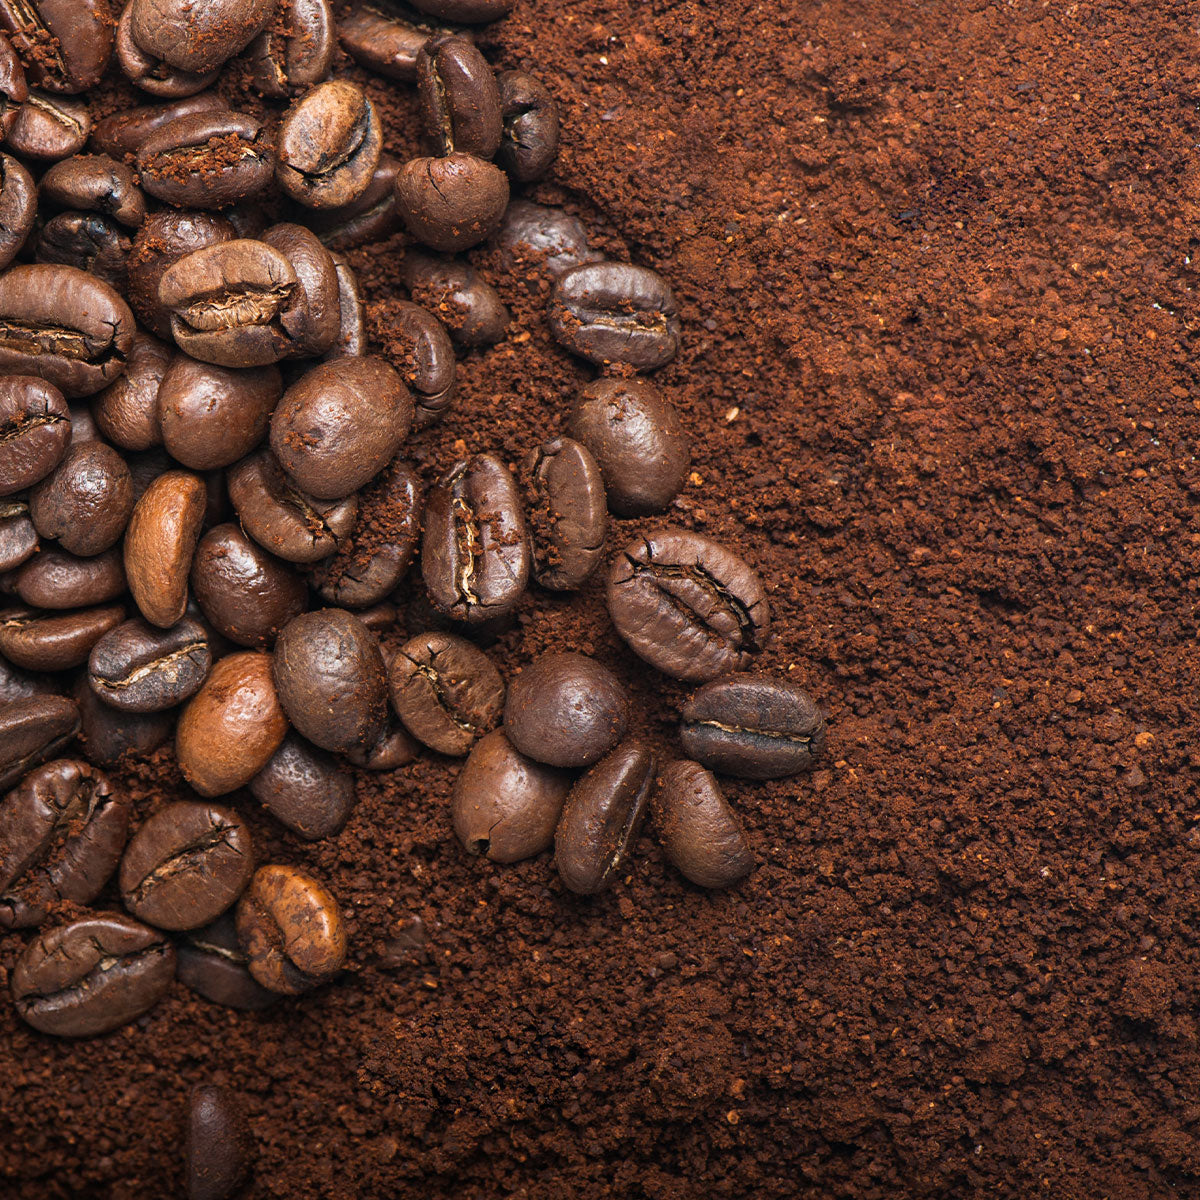 Coffee beans next to ground coffee